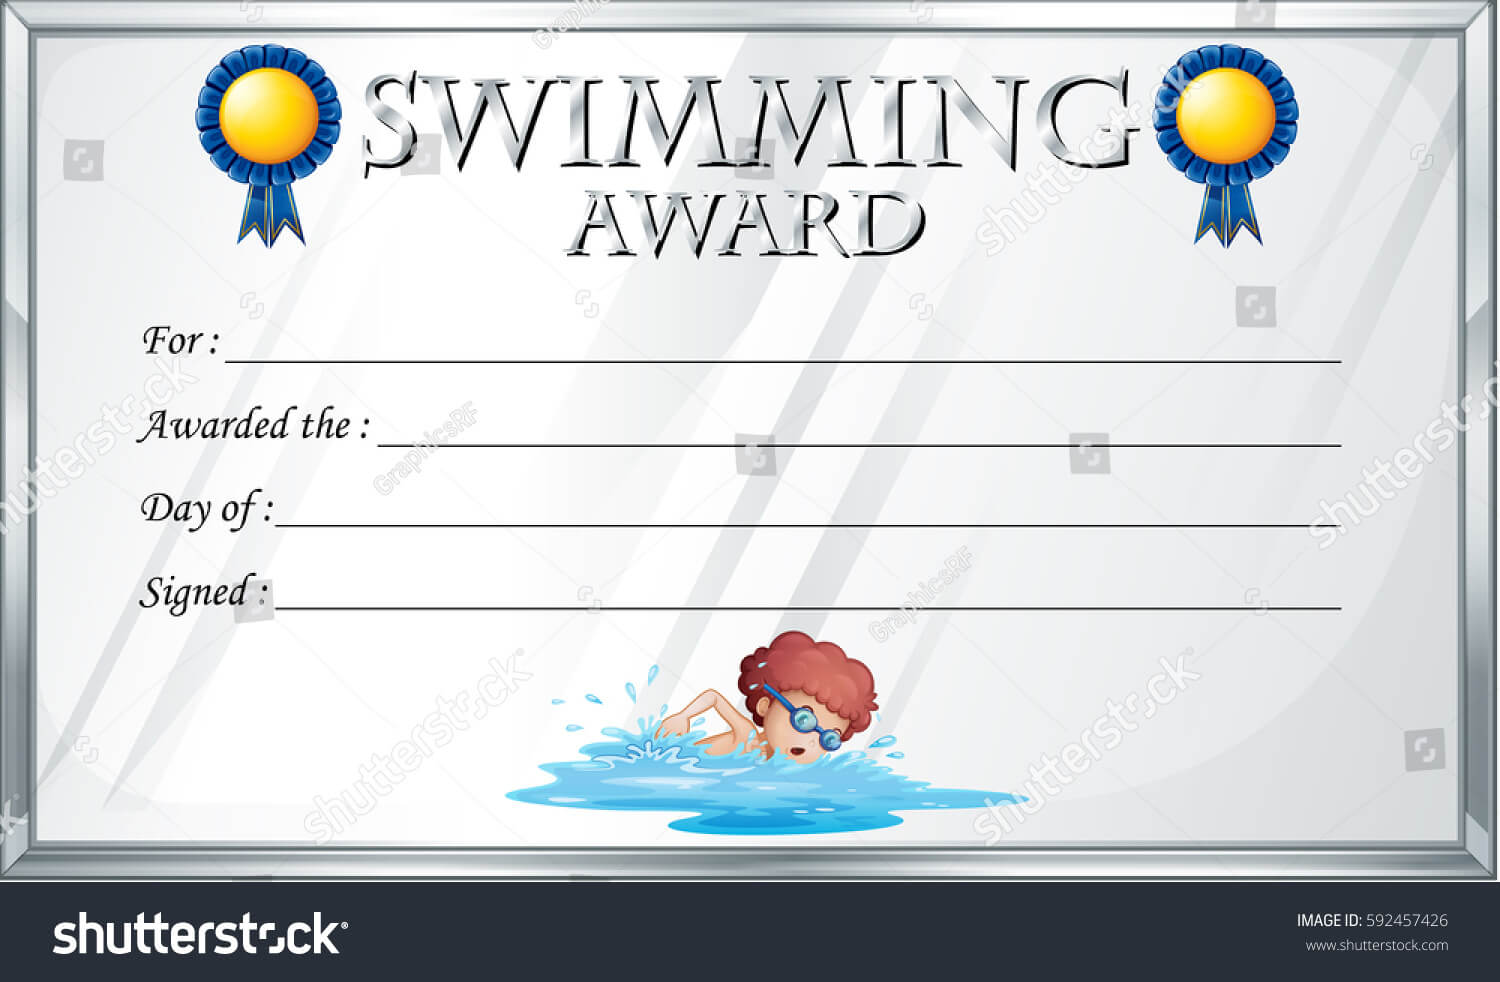 Certificate Template Swimming Award Illustration Stock With Regard To Swimming Award Certificate Template